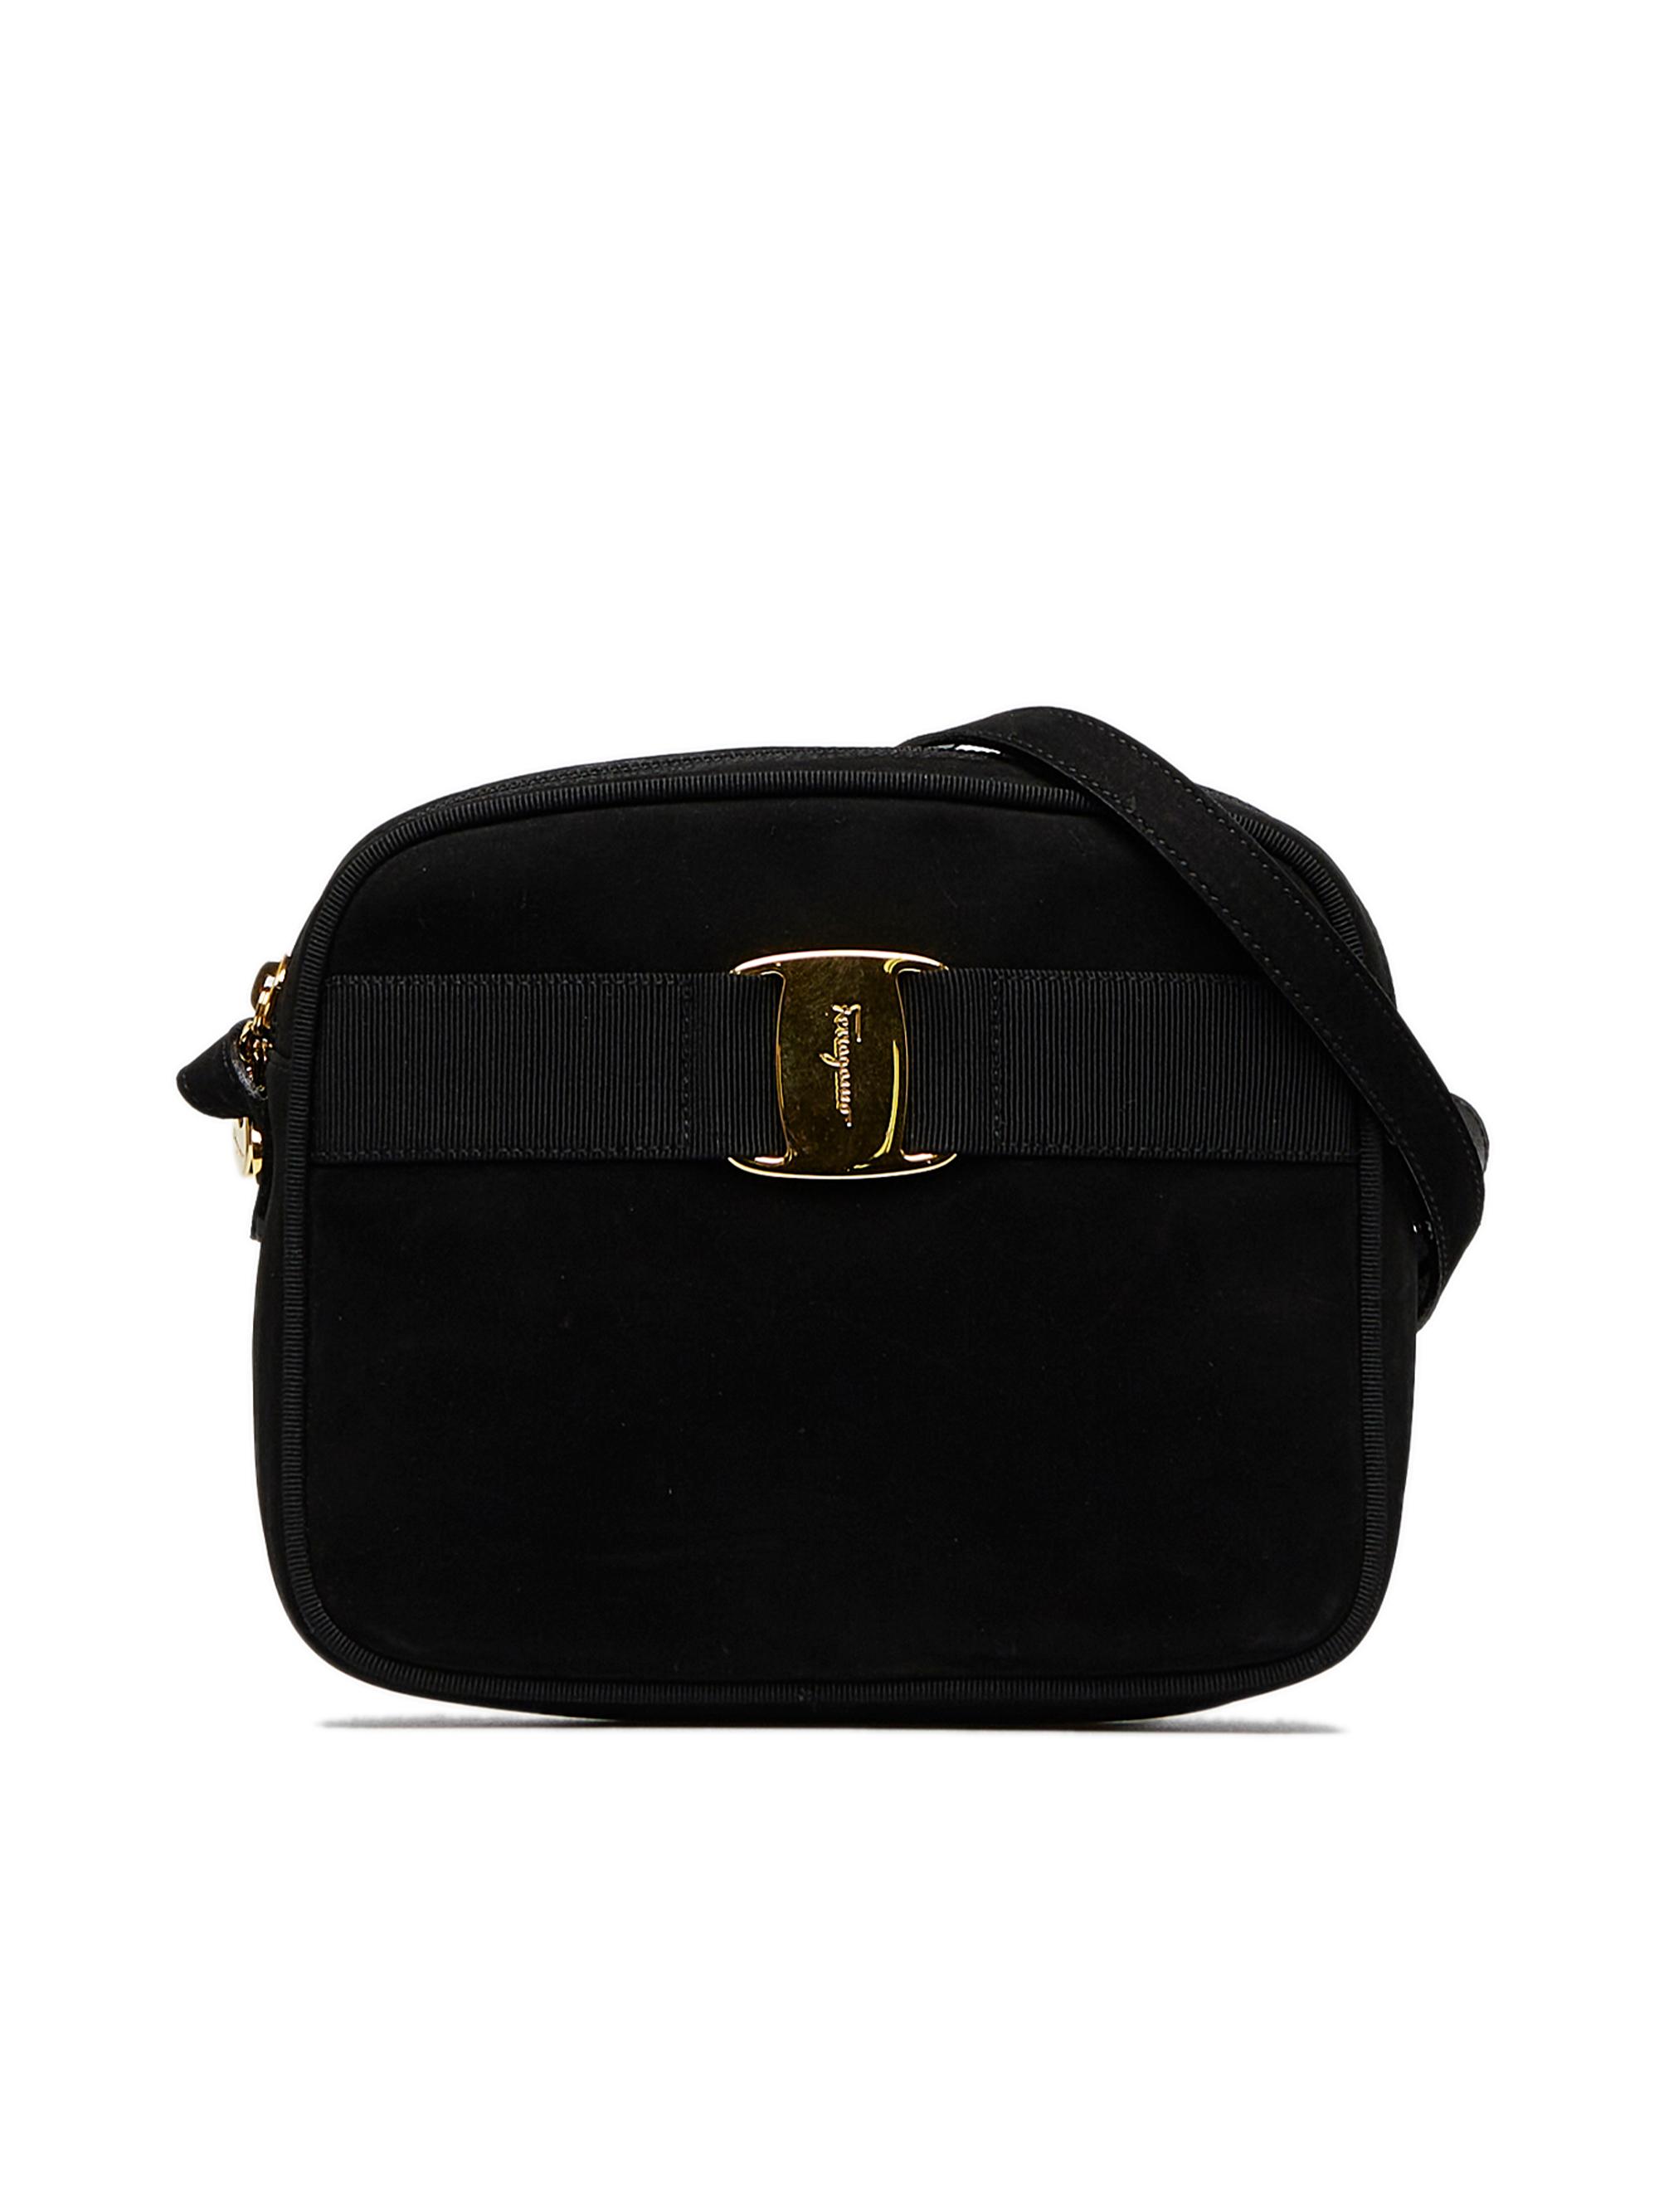 Gucci Vintage Black Suede Leather Princess Diana Maxi Xl Tote Bag